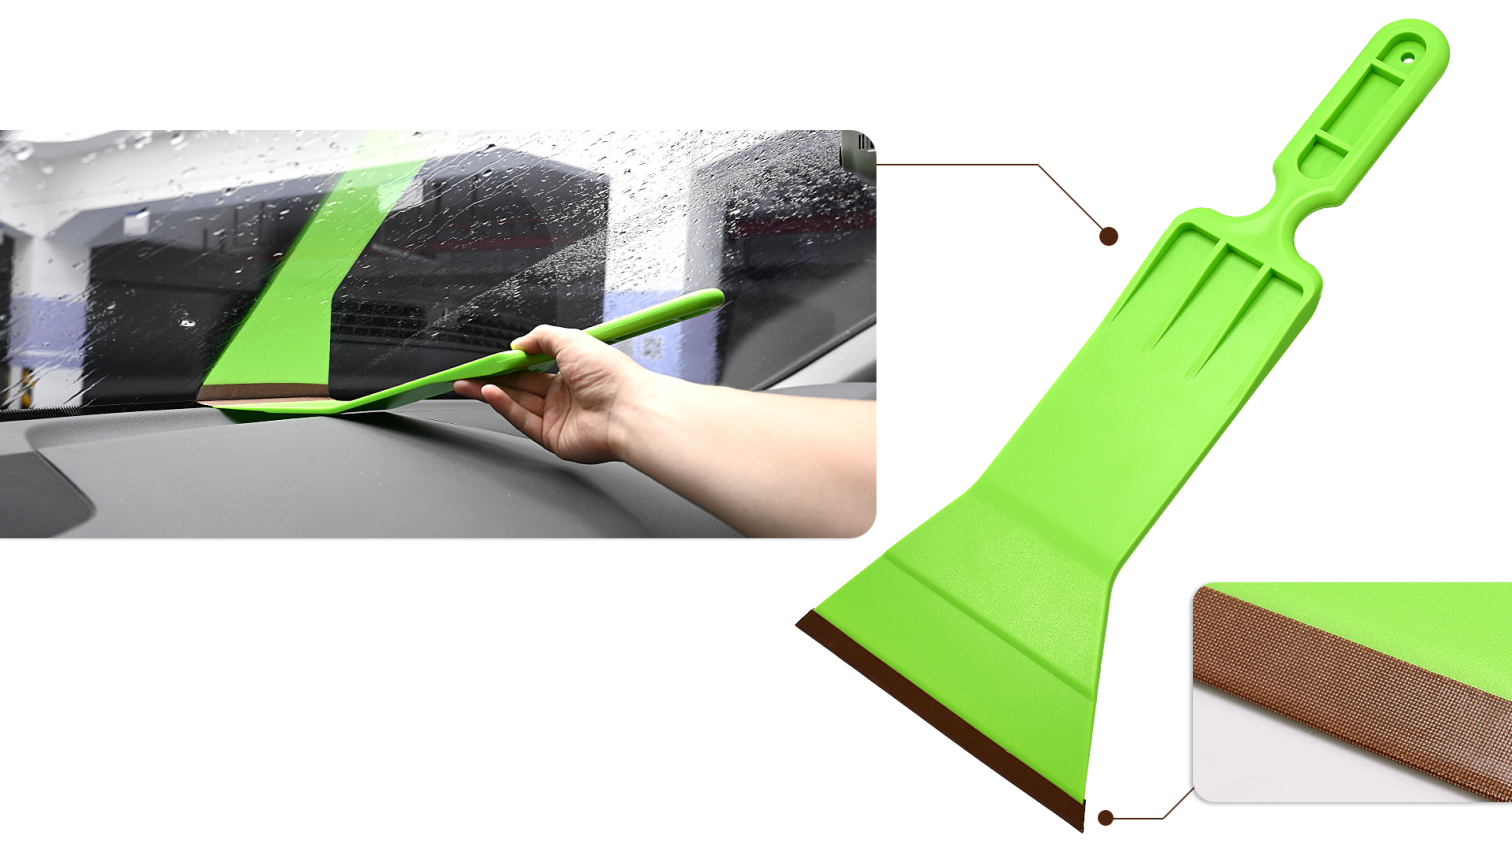 FOSHIO Vinyl Wrap Stick Squeegee Kit PPF Window Tint Scraper Cutter